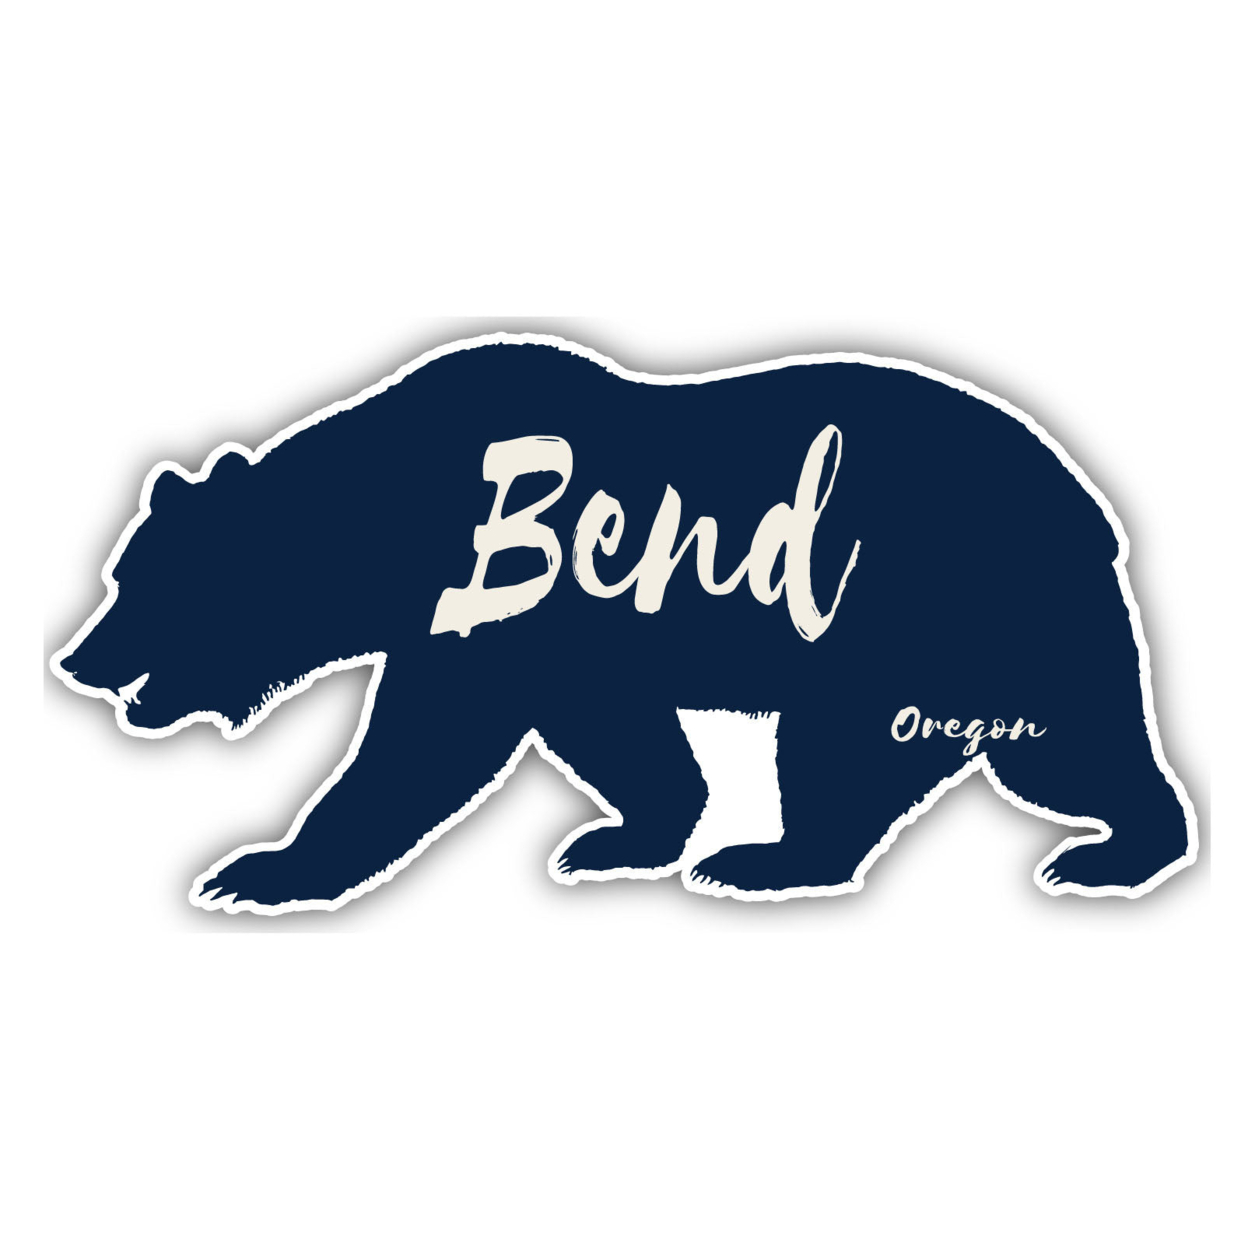 Bend Oregon Souvenir Decorative Stickers (Choose Theme And Size) - 4-Pack, 10-Inch, Tent